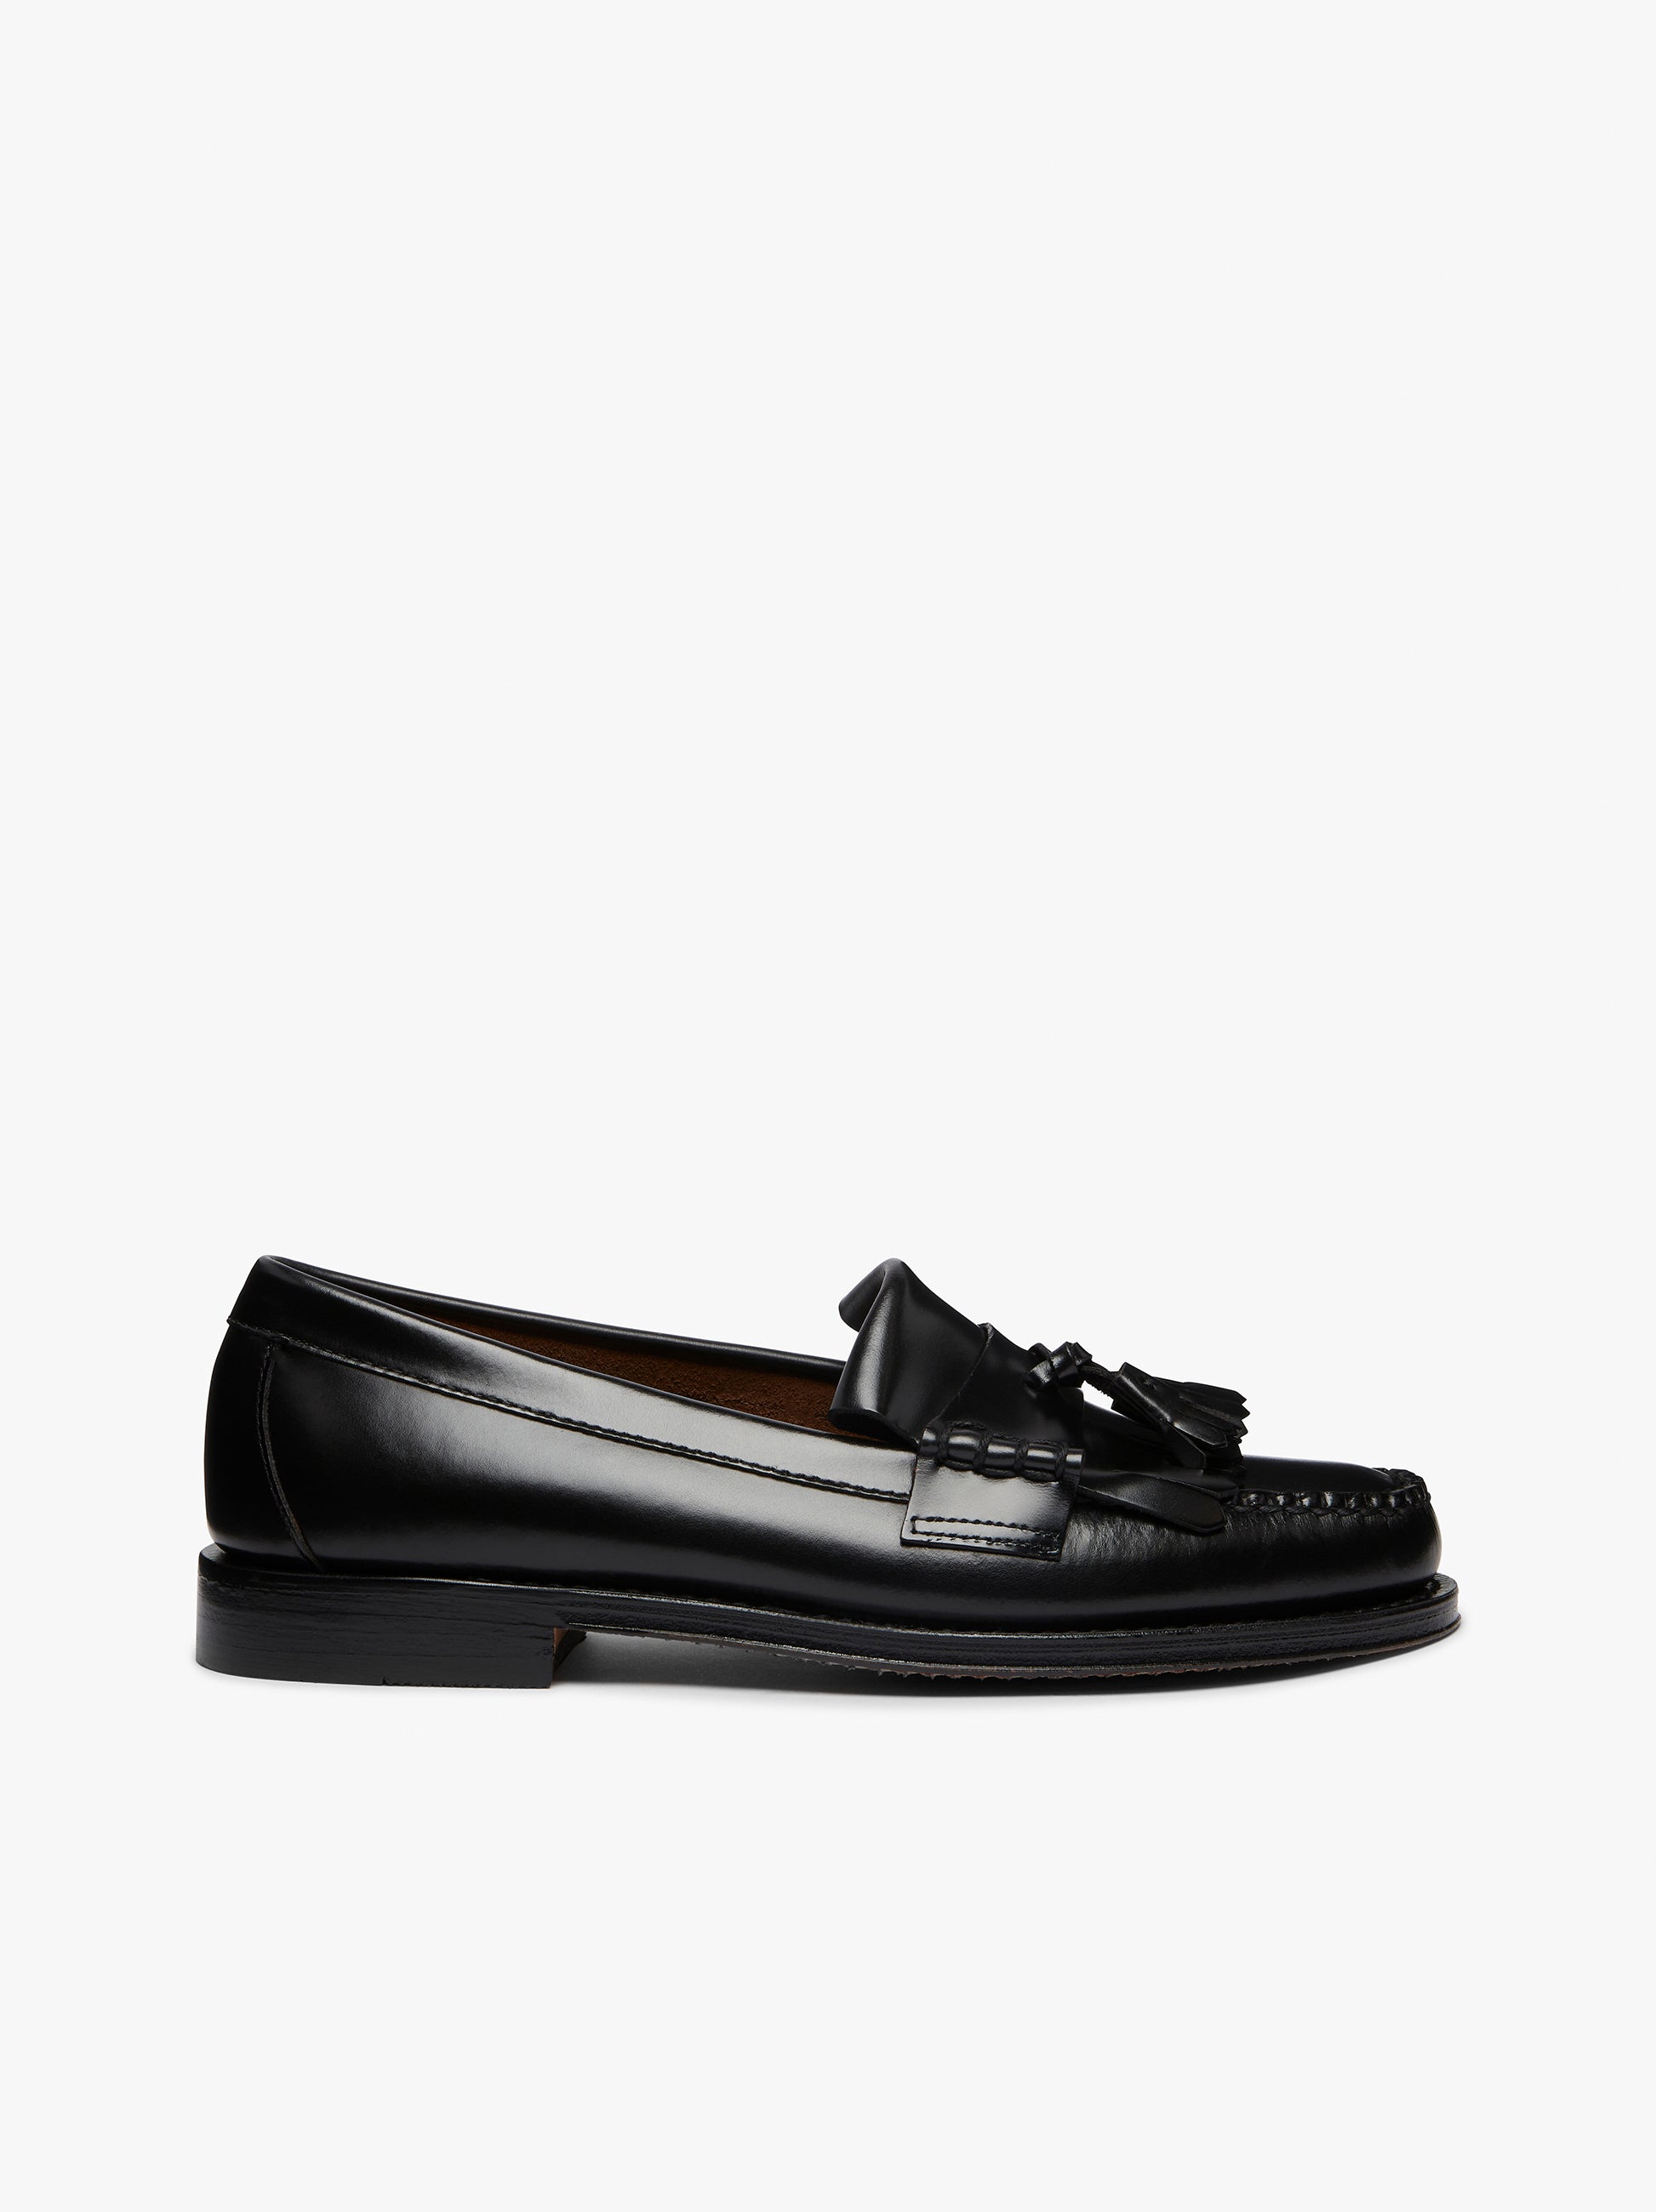 【最適な価格】G.H. BASS WEEJUNS LAYTON2 BLACK 新品 靴